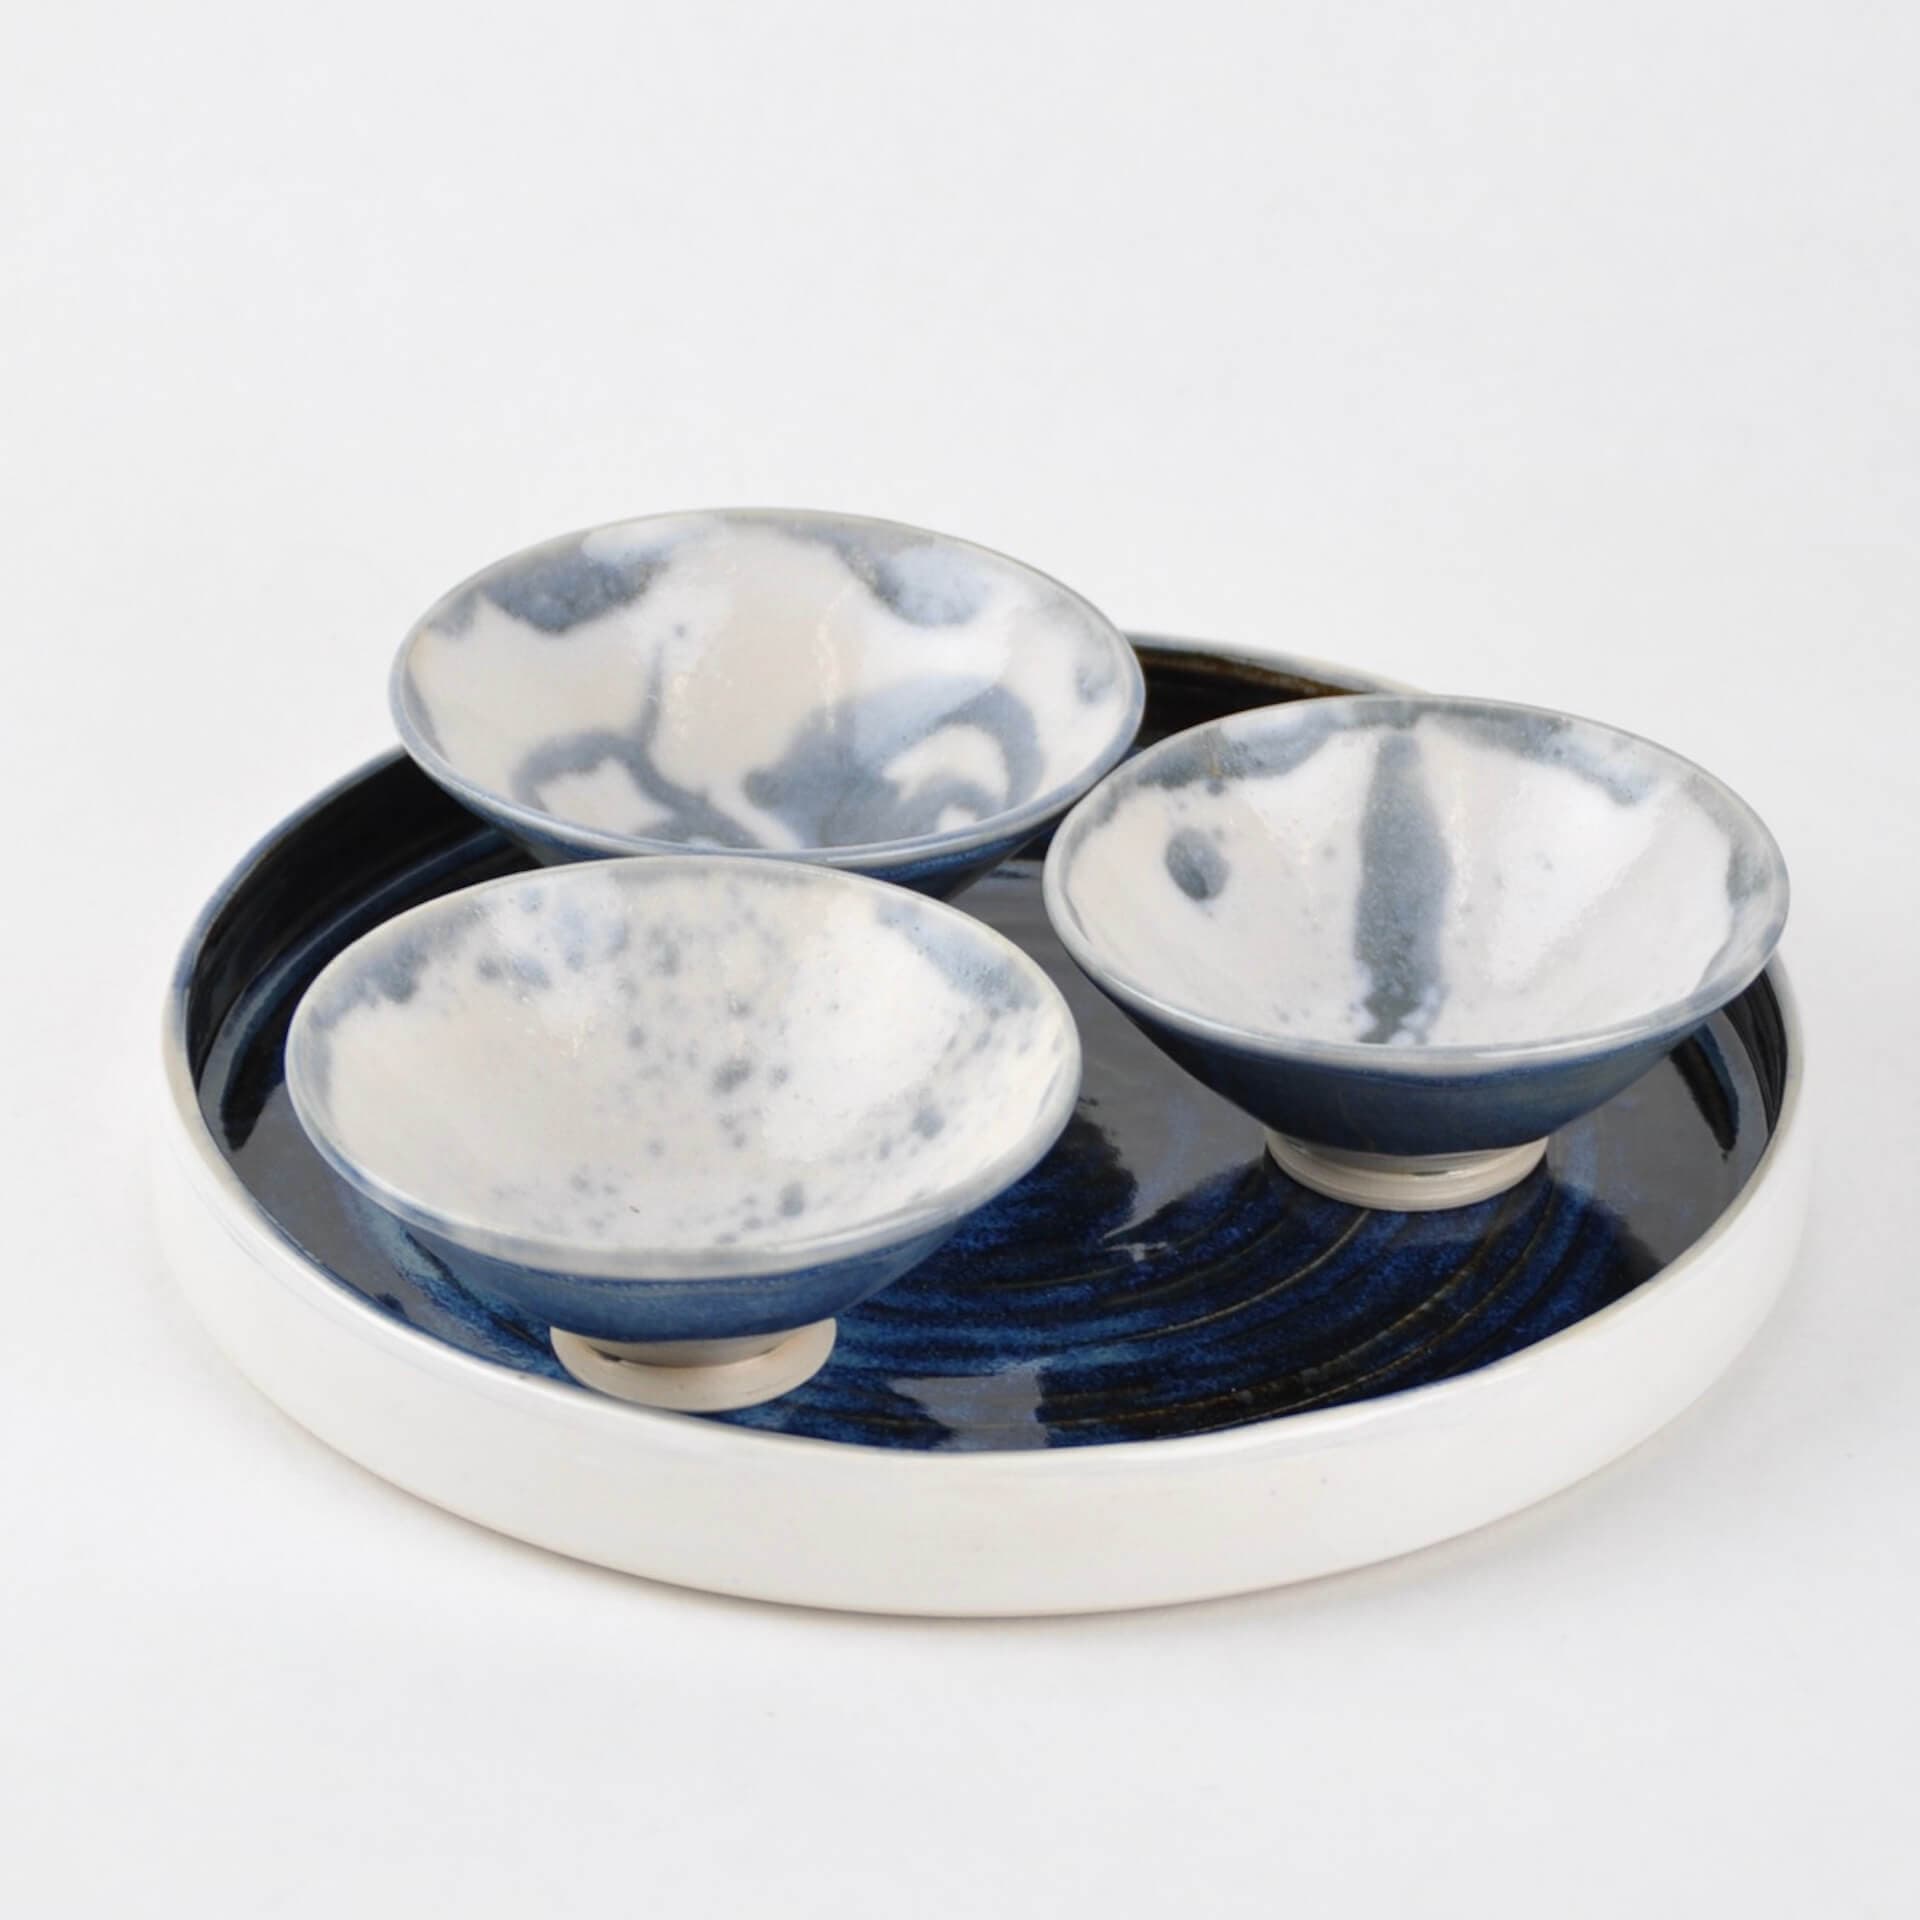 Hunkydory Ceramics Serving Dish in 'Mottled Blue' Glaze